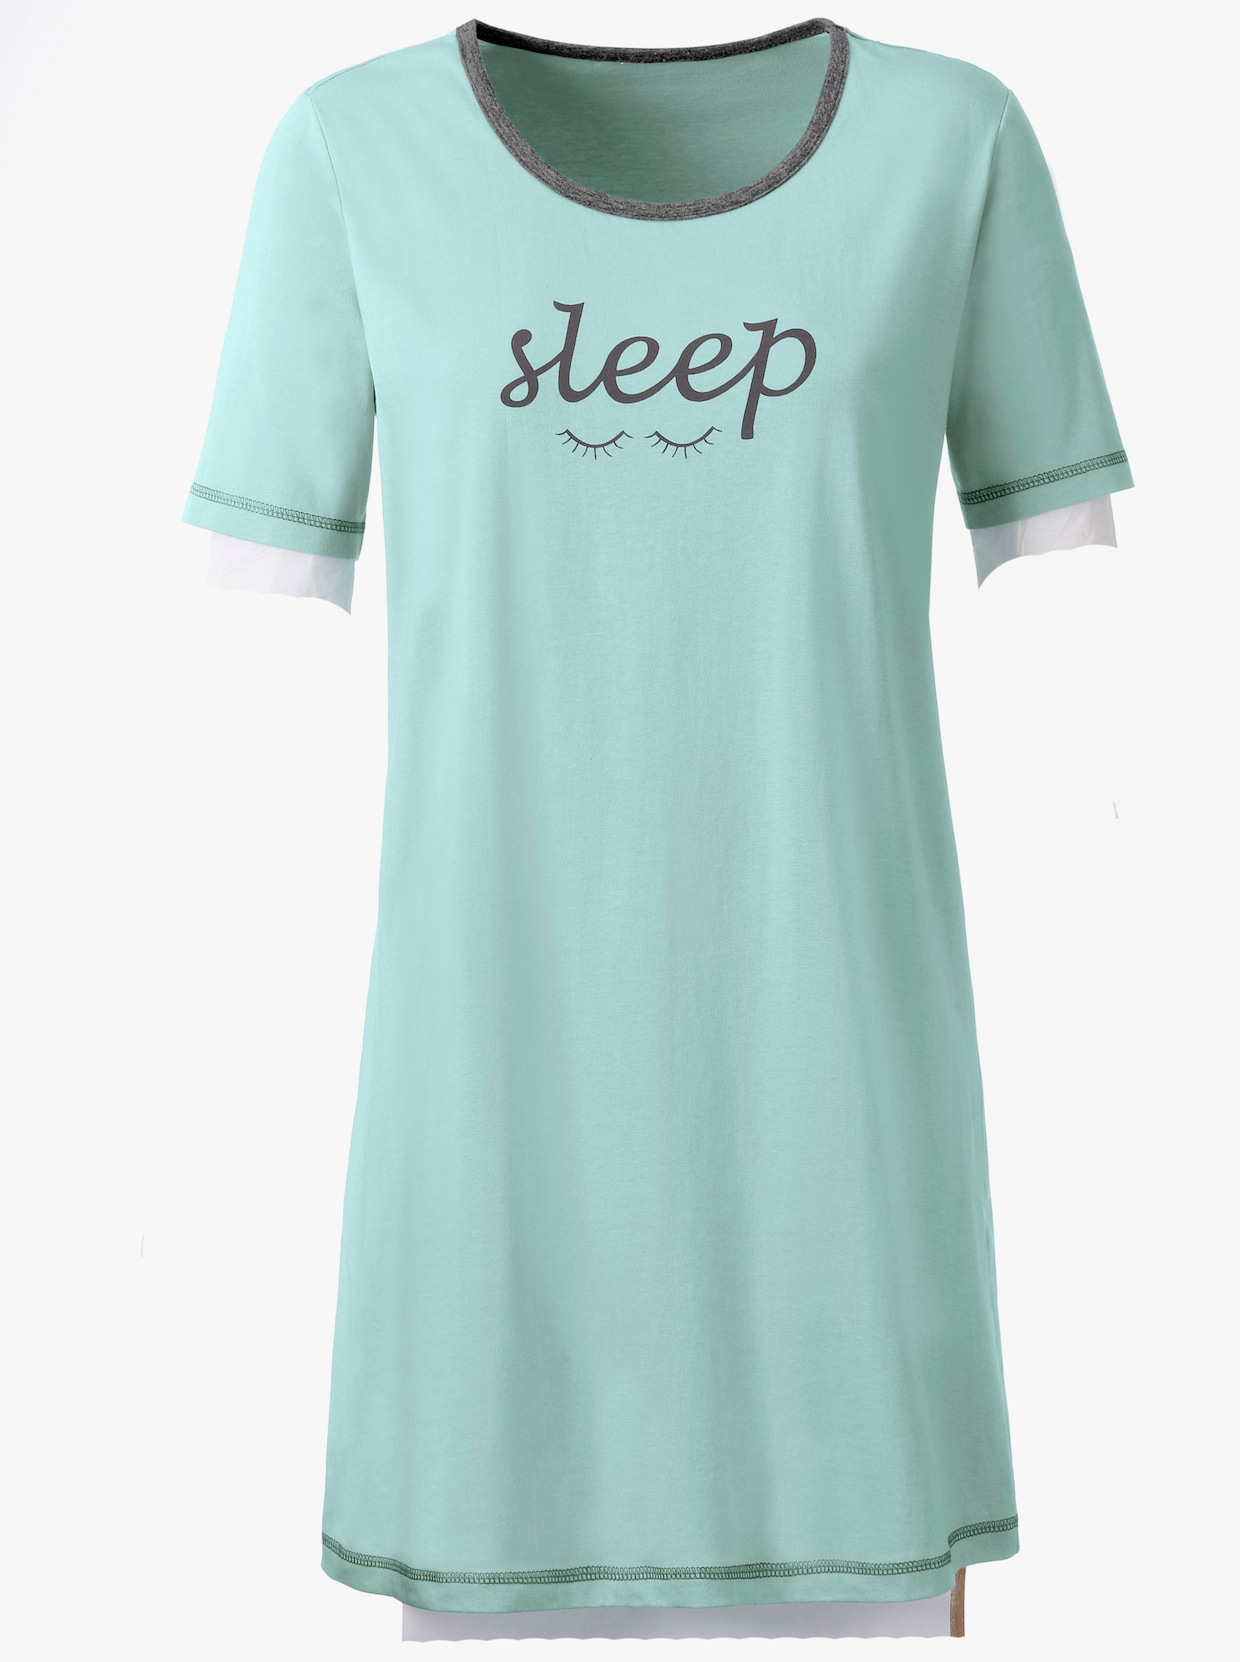 wäschepur Sleepshirts - grau-meliert + mint